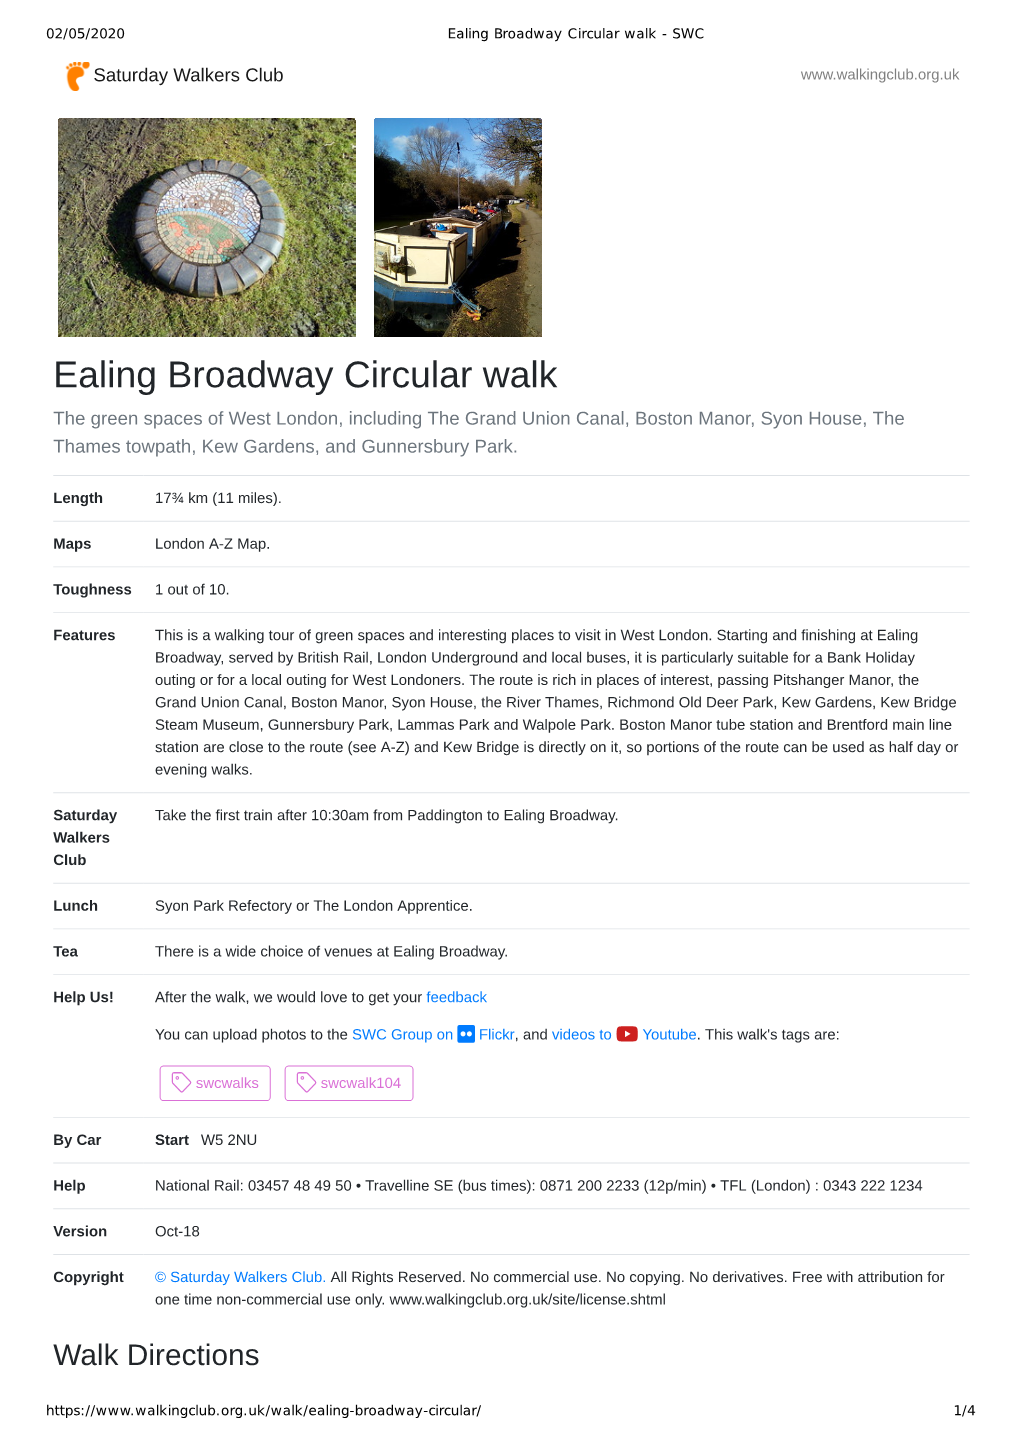 Ealing Broadway Circular Walk - SWC